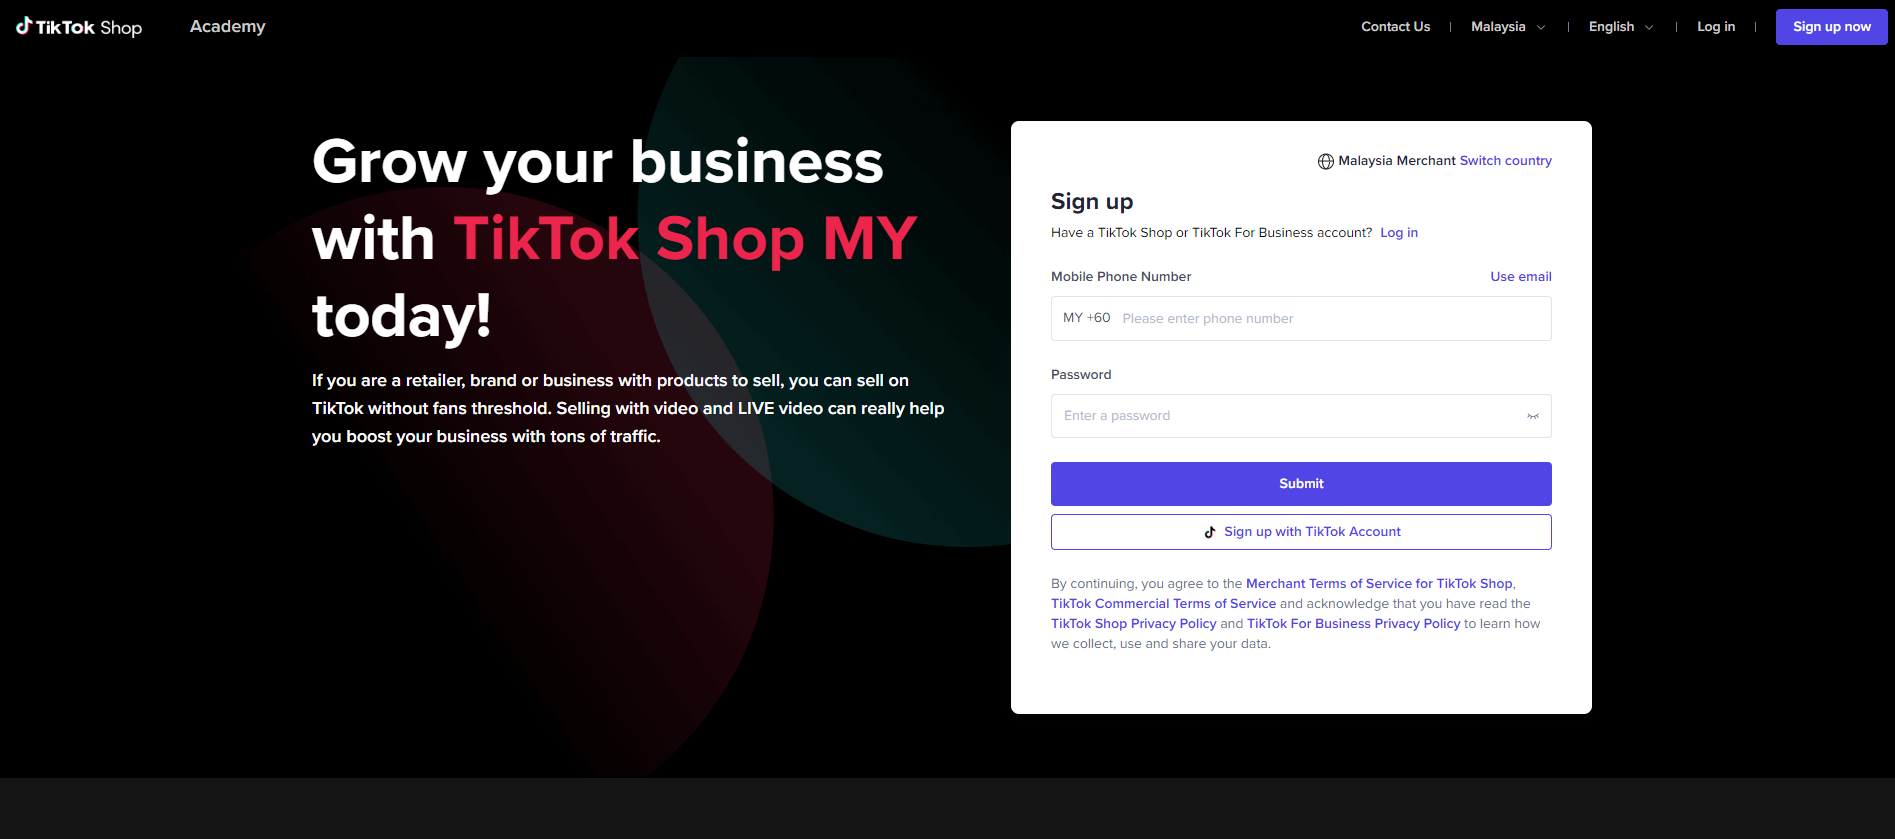 Sign up a TikTok Shop Account